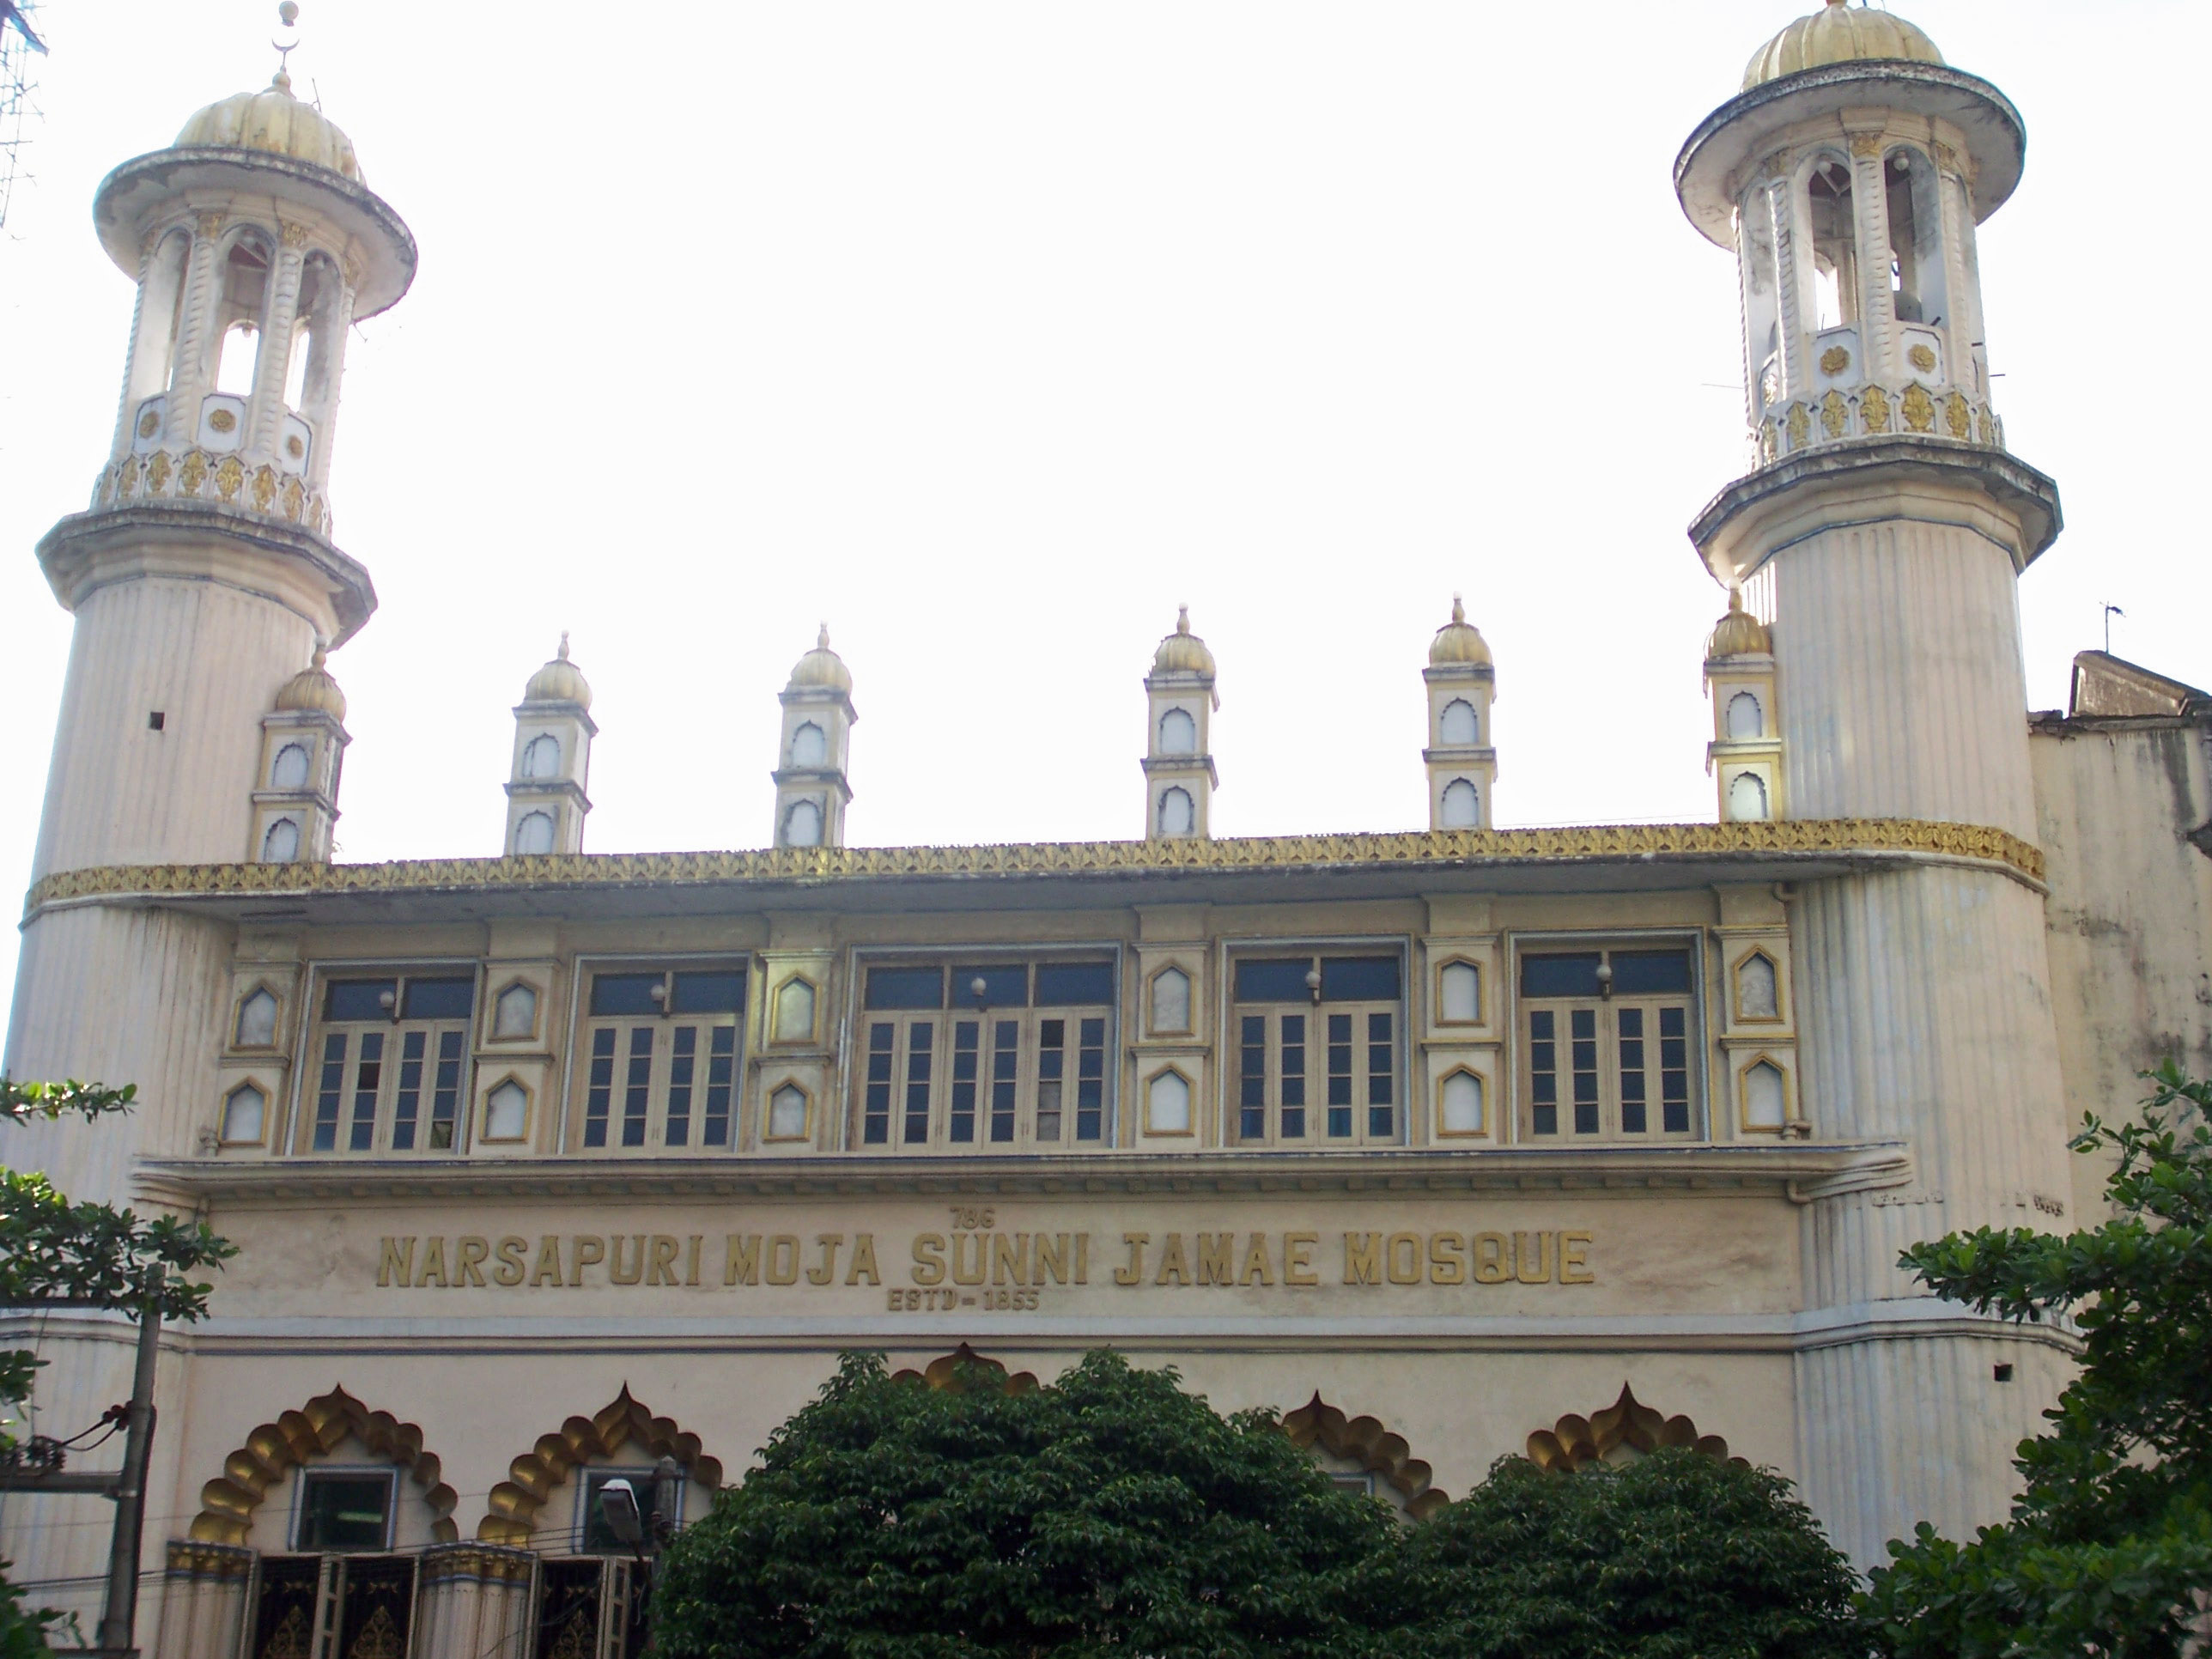 The Narsapuri Moja Sunni Jamae Mosque in downtown Yangon. Photo: WikiCommons / ES